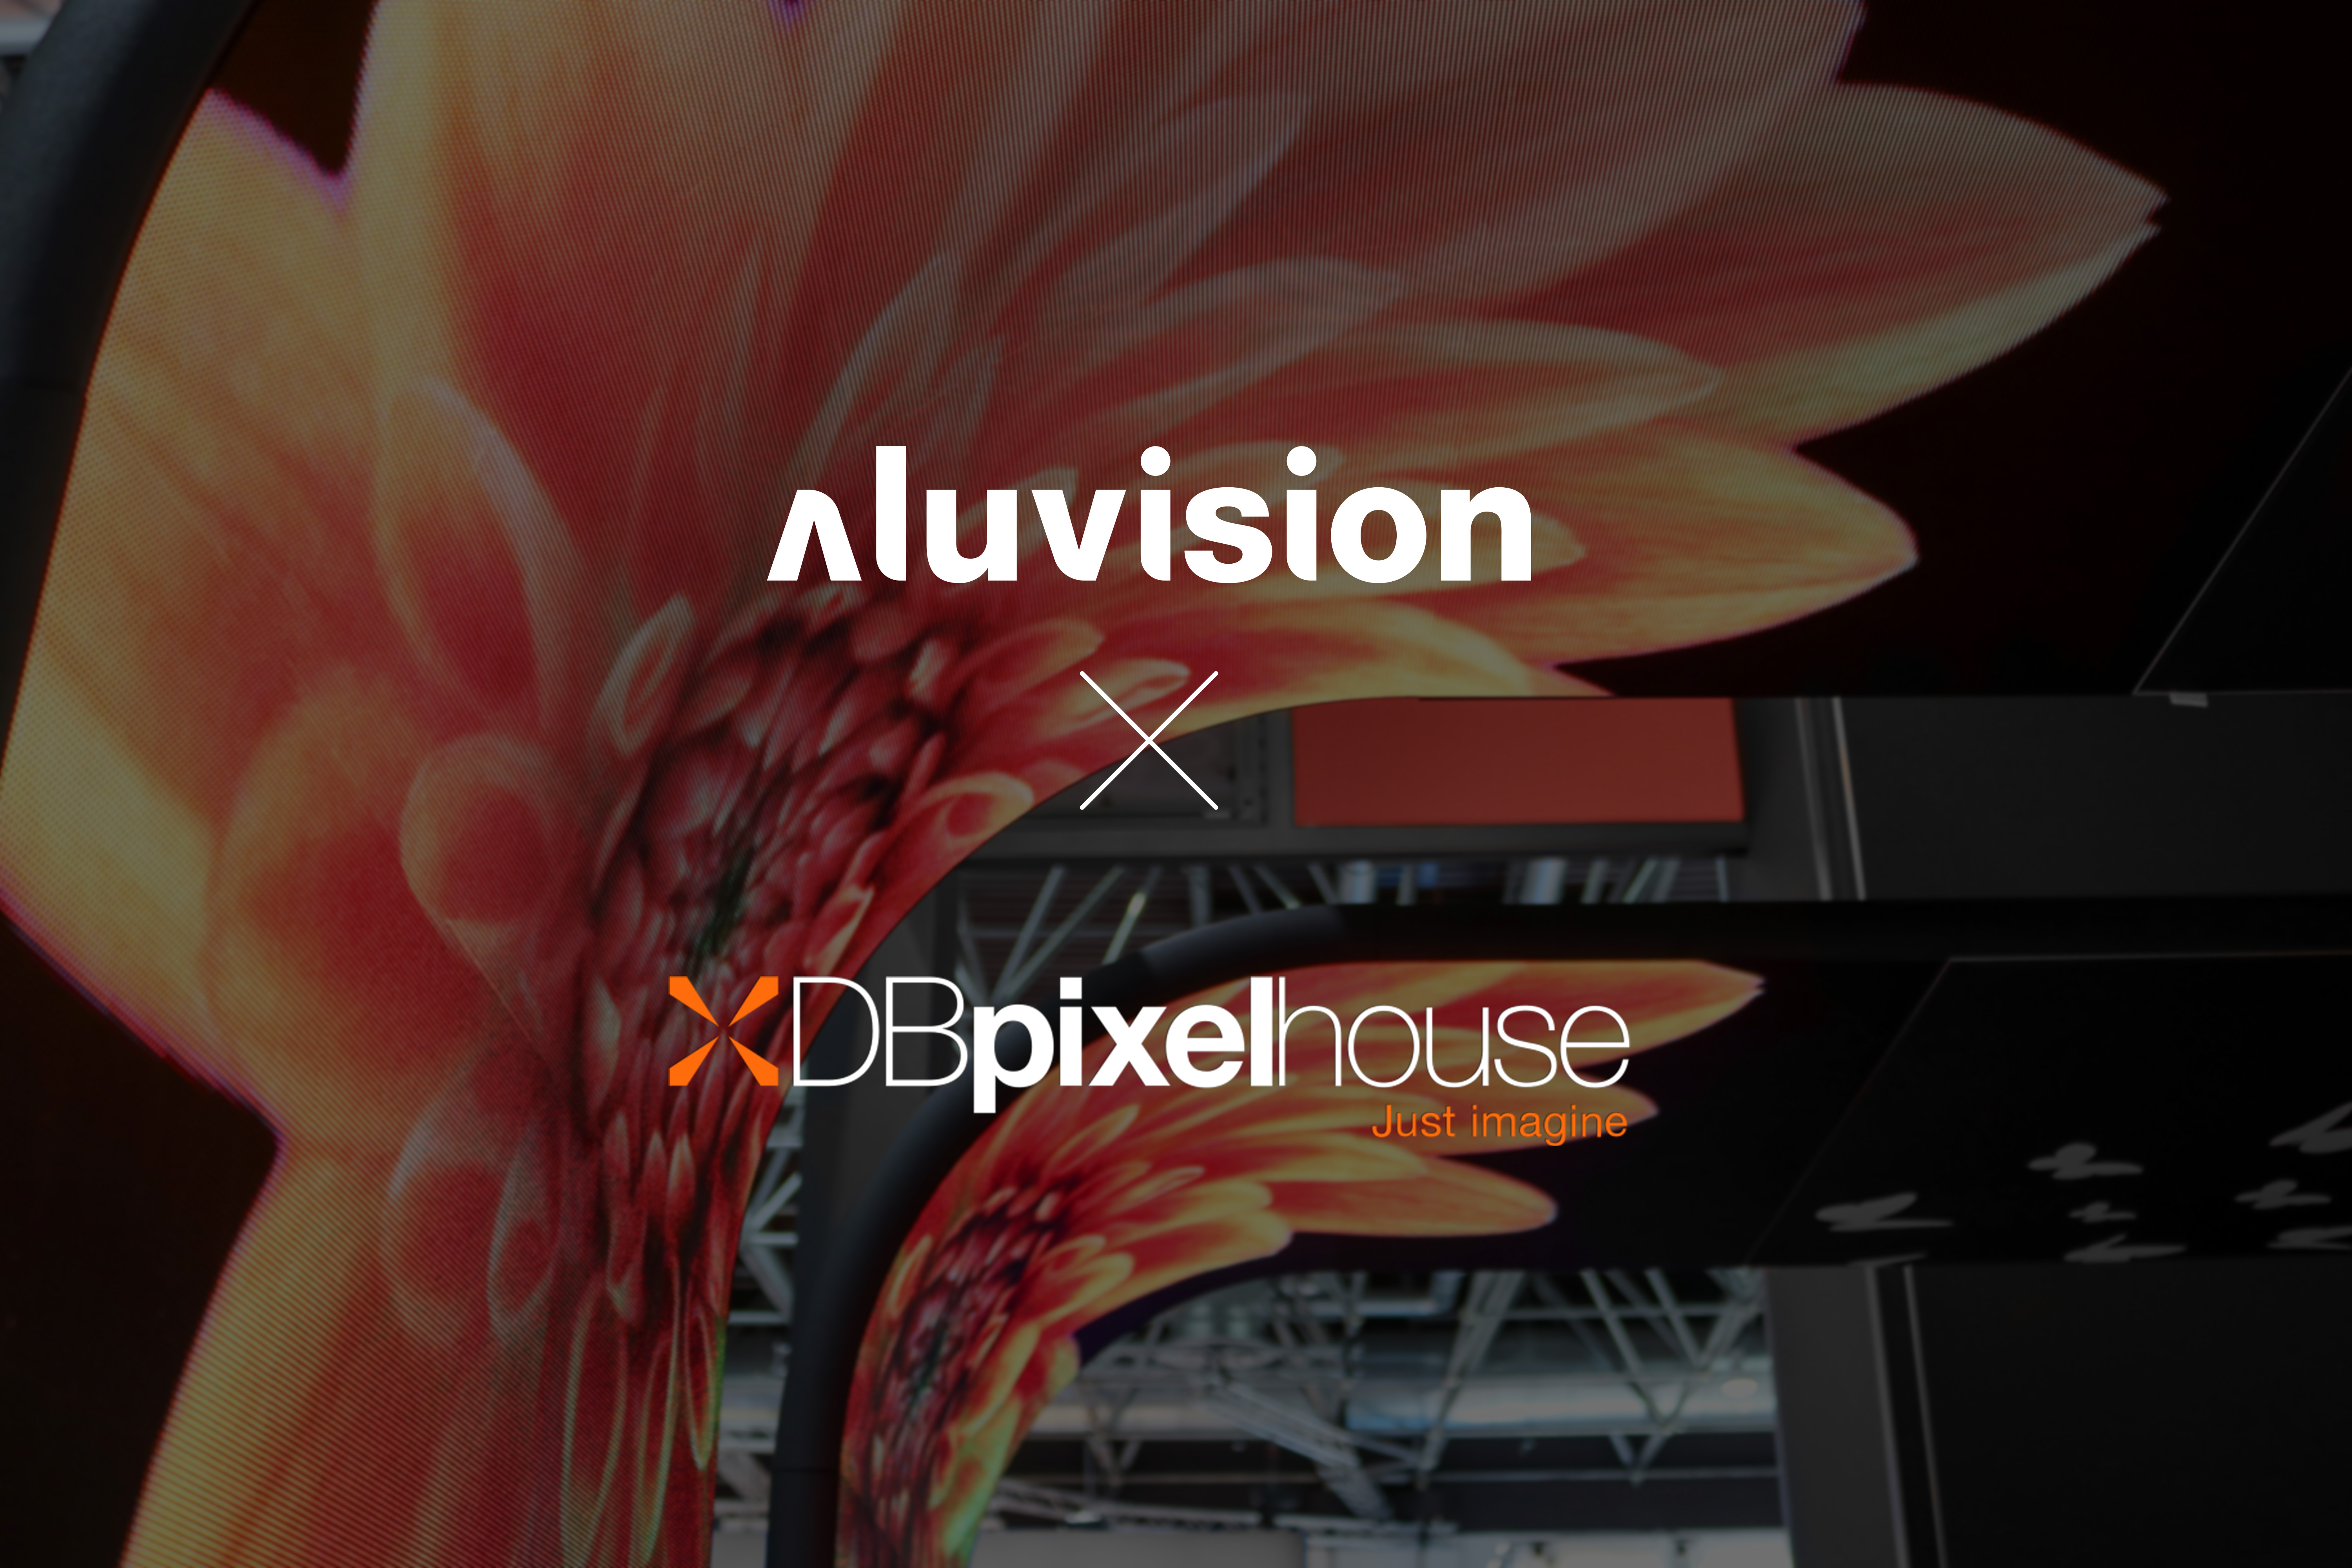 Aluvision strengthens presence in UK AV market through collaboration with DBpixelhouse!